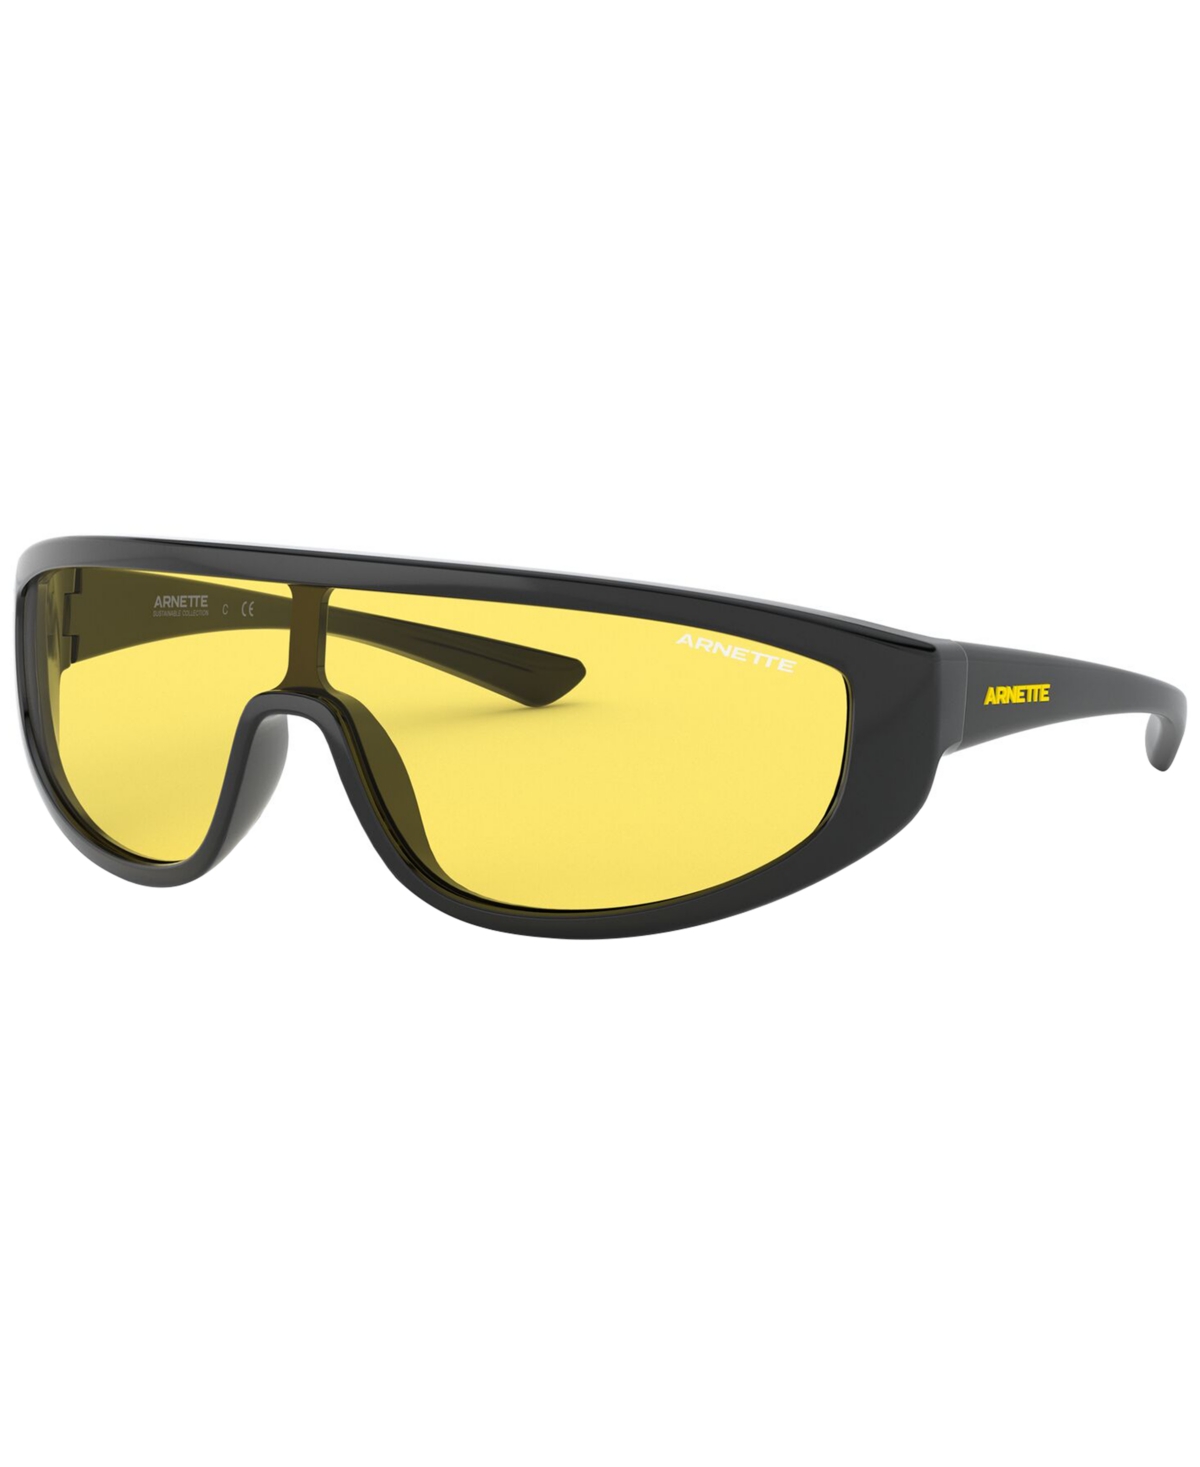 Men's Sunglasses, AN4264 - BLACK/YELLOW